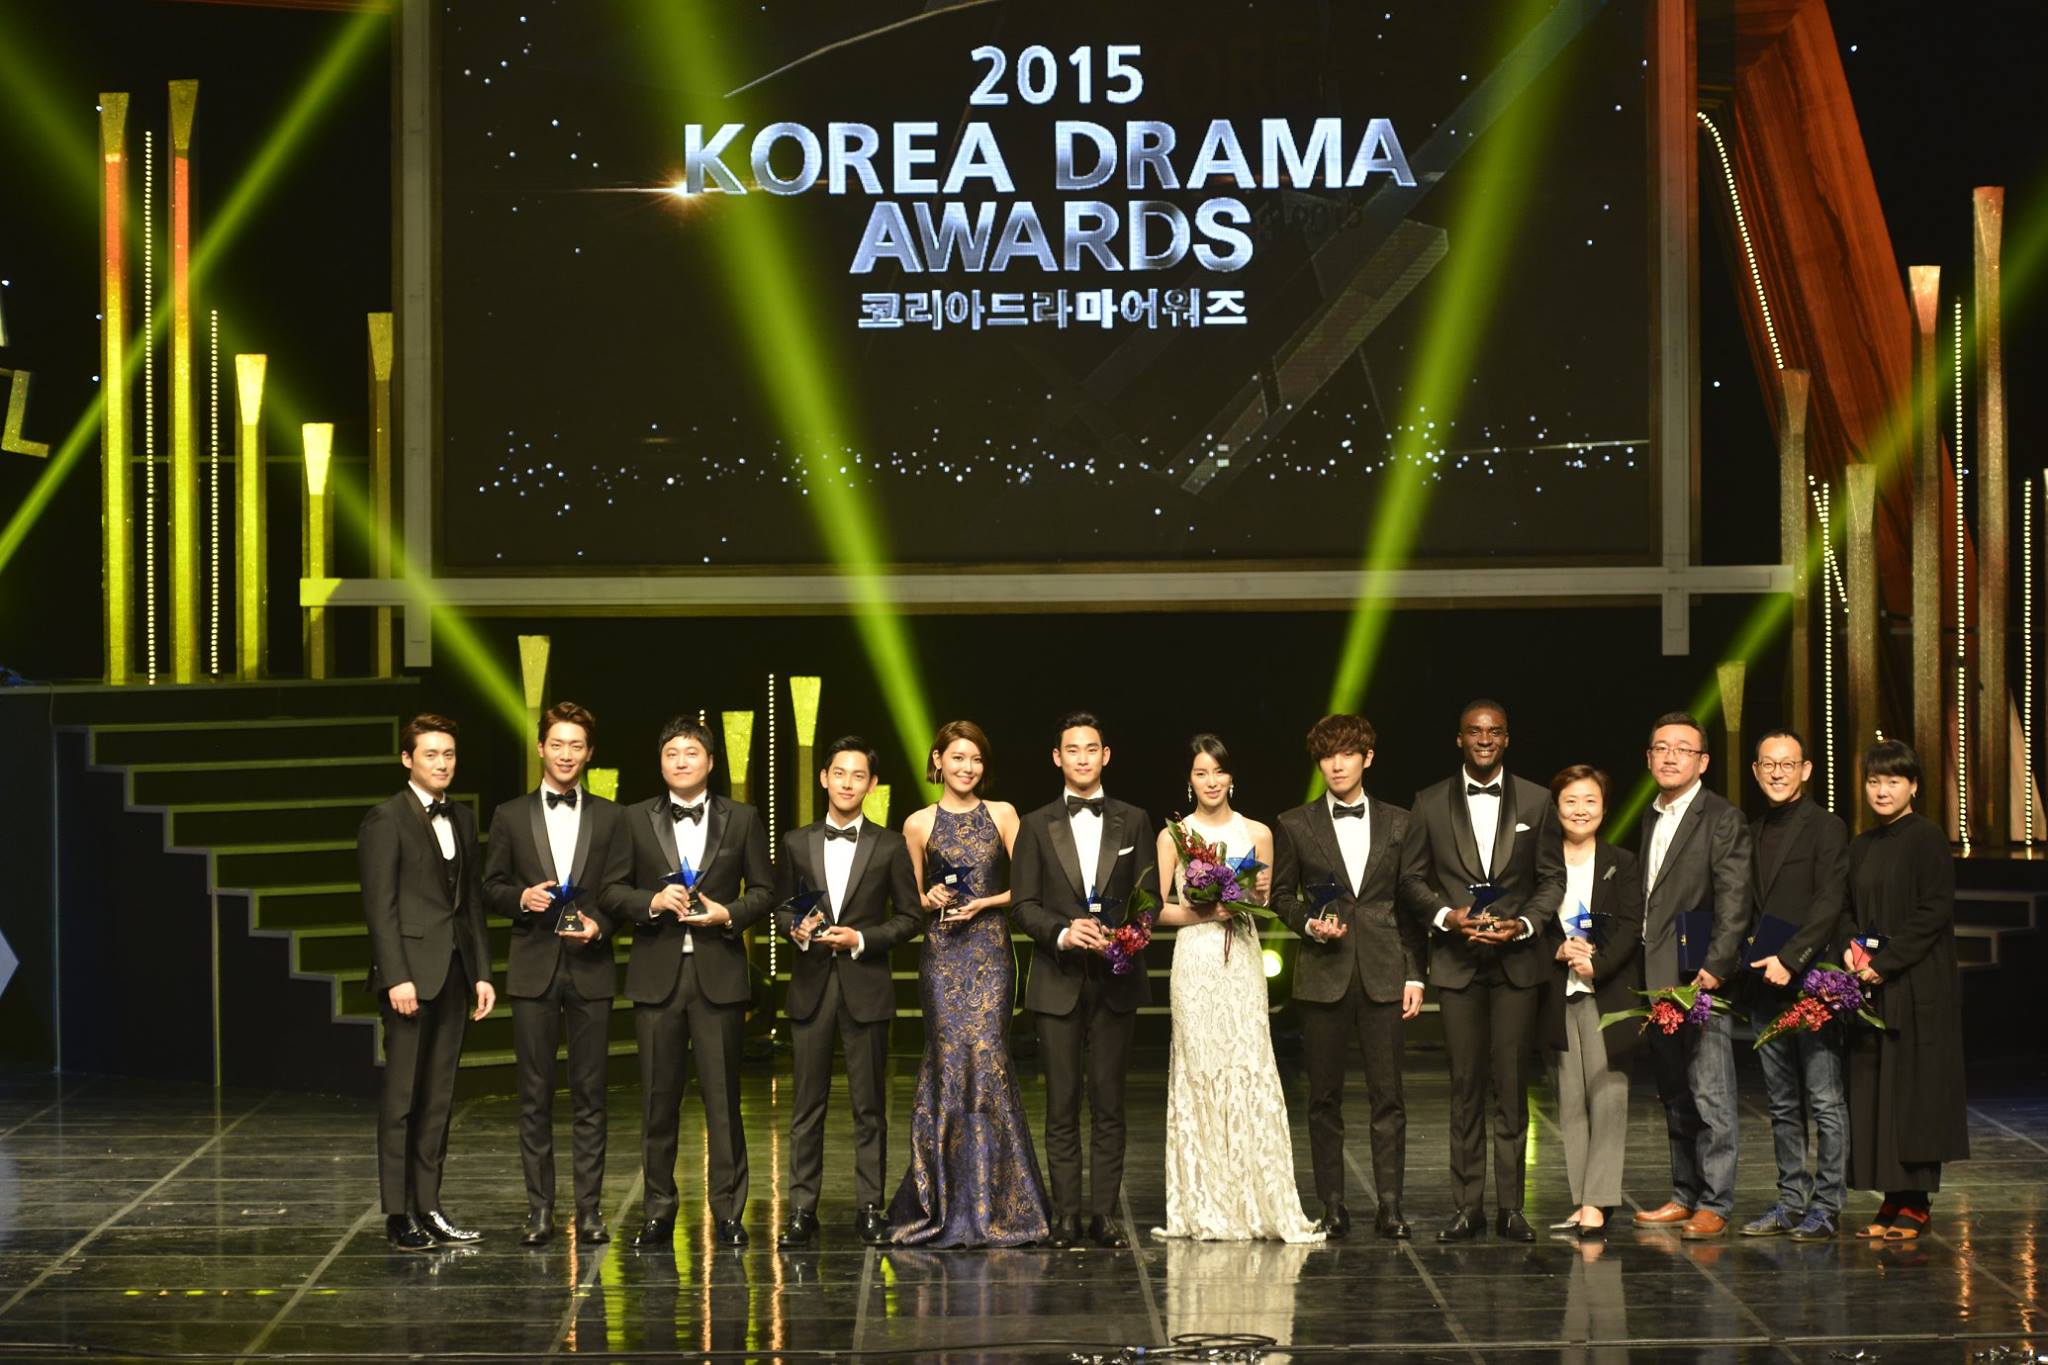 Korea Drama Awards Facebook